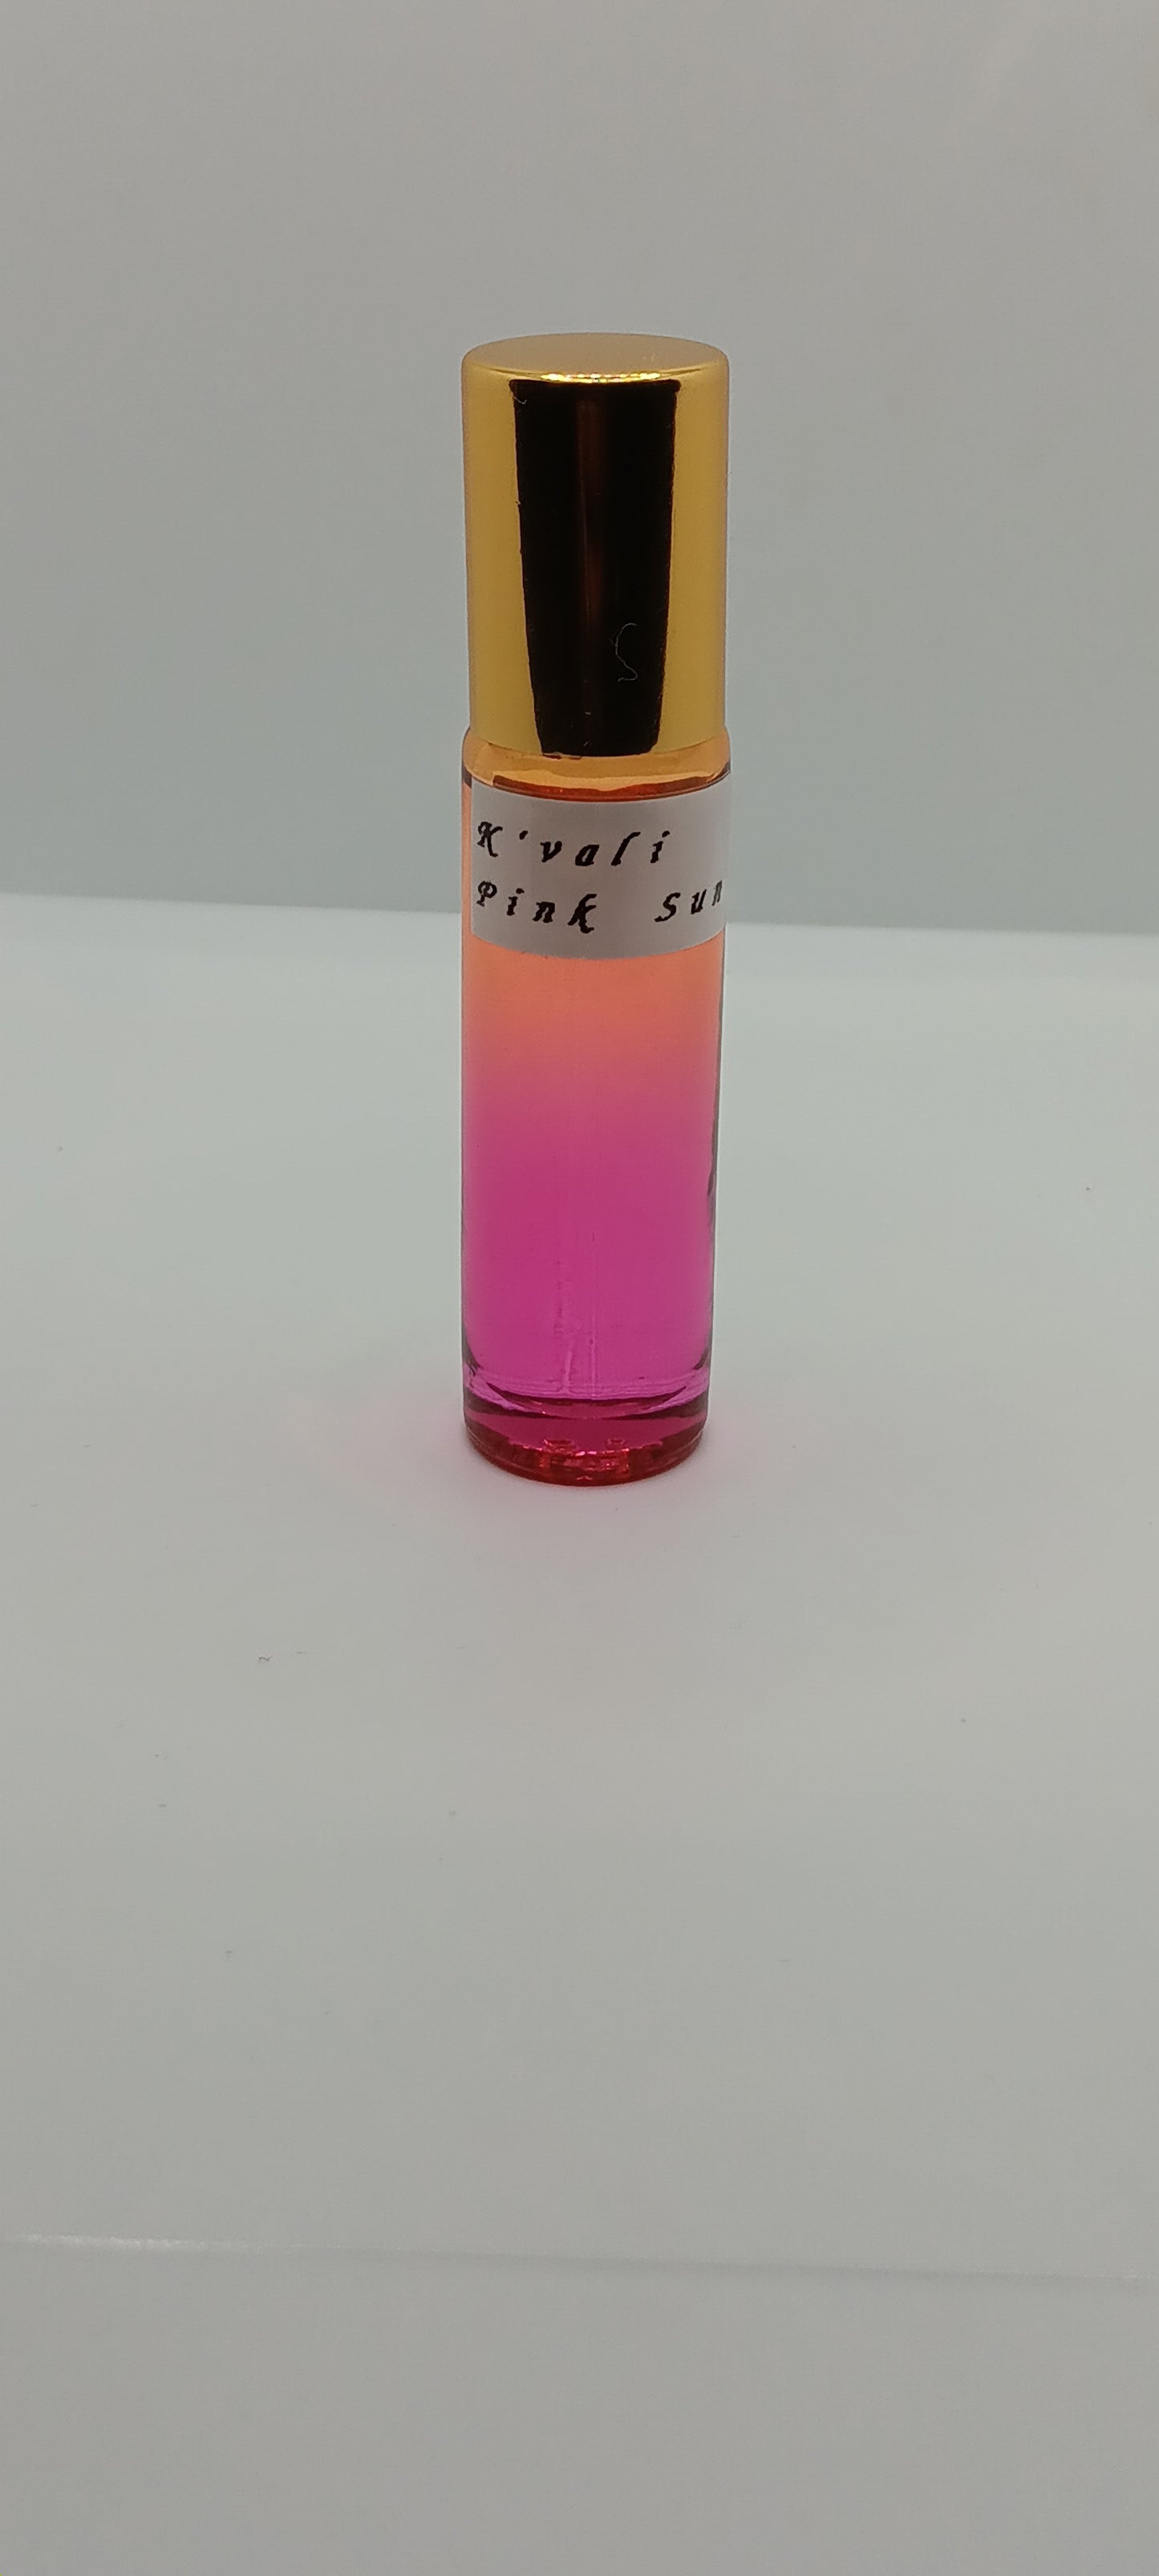 K'vali Pink Sun/Peach & Pink Bottle